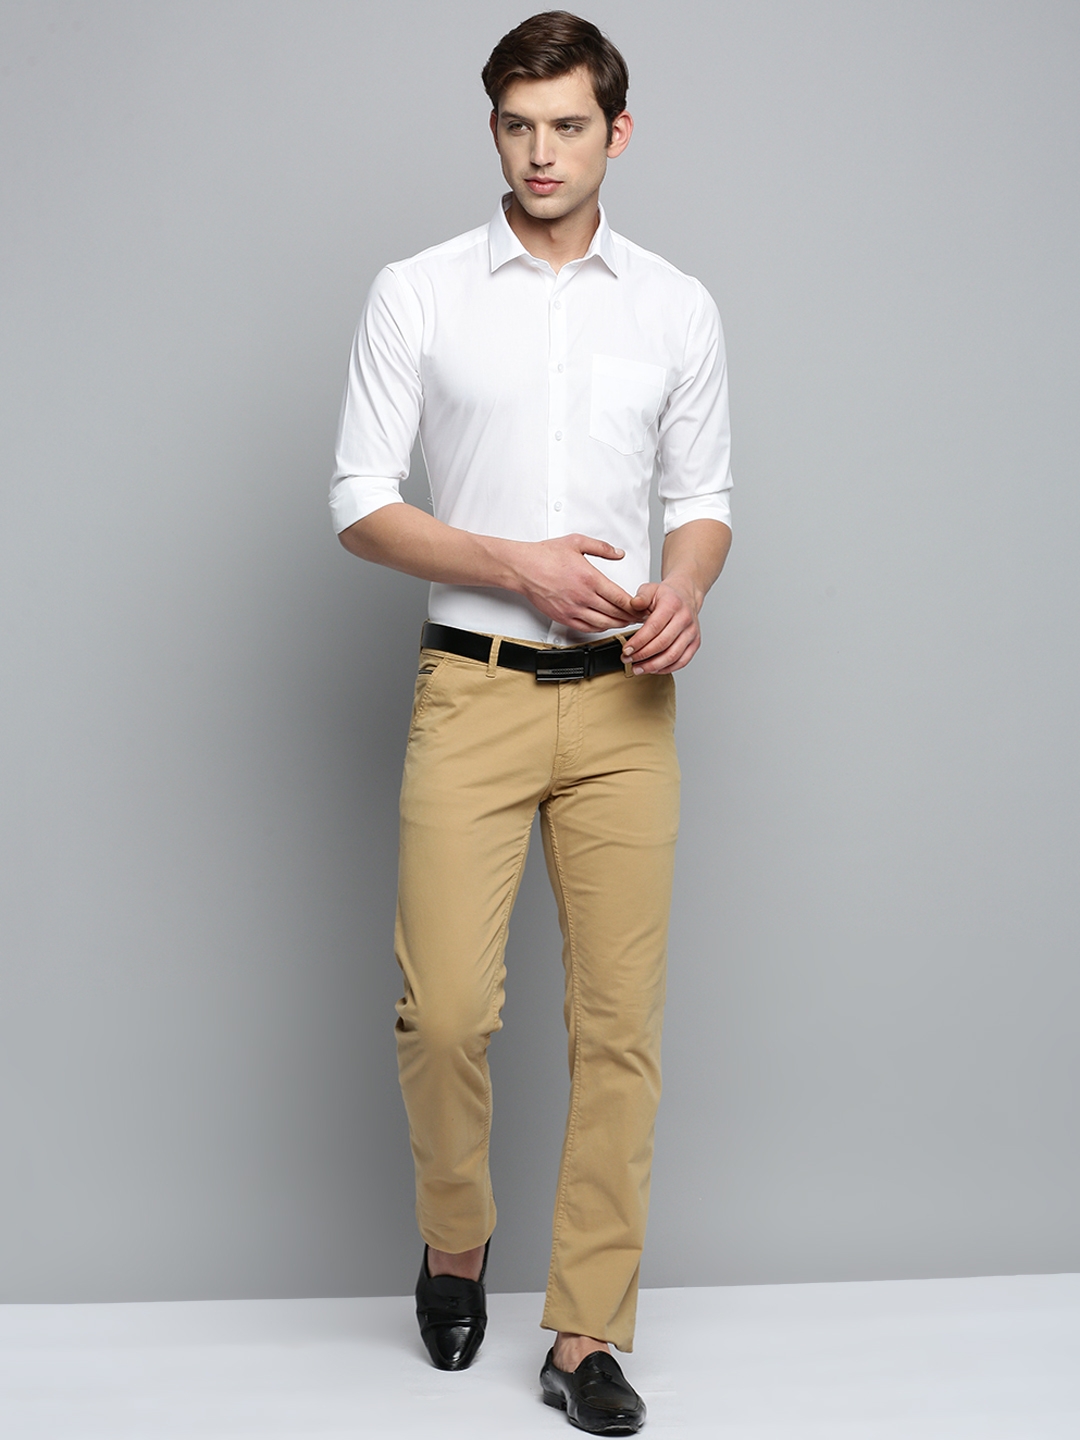 Showoff | SHOWOFF Men's Spread Collar Solid White Smart Shirt 4